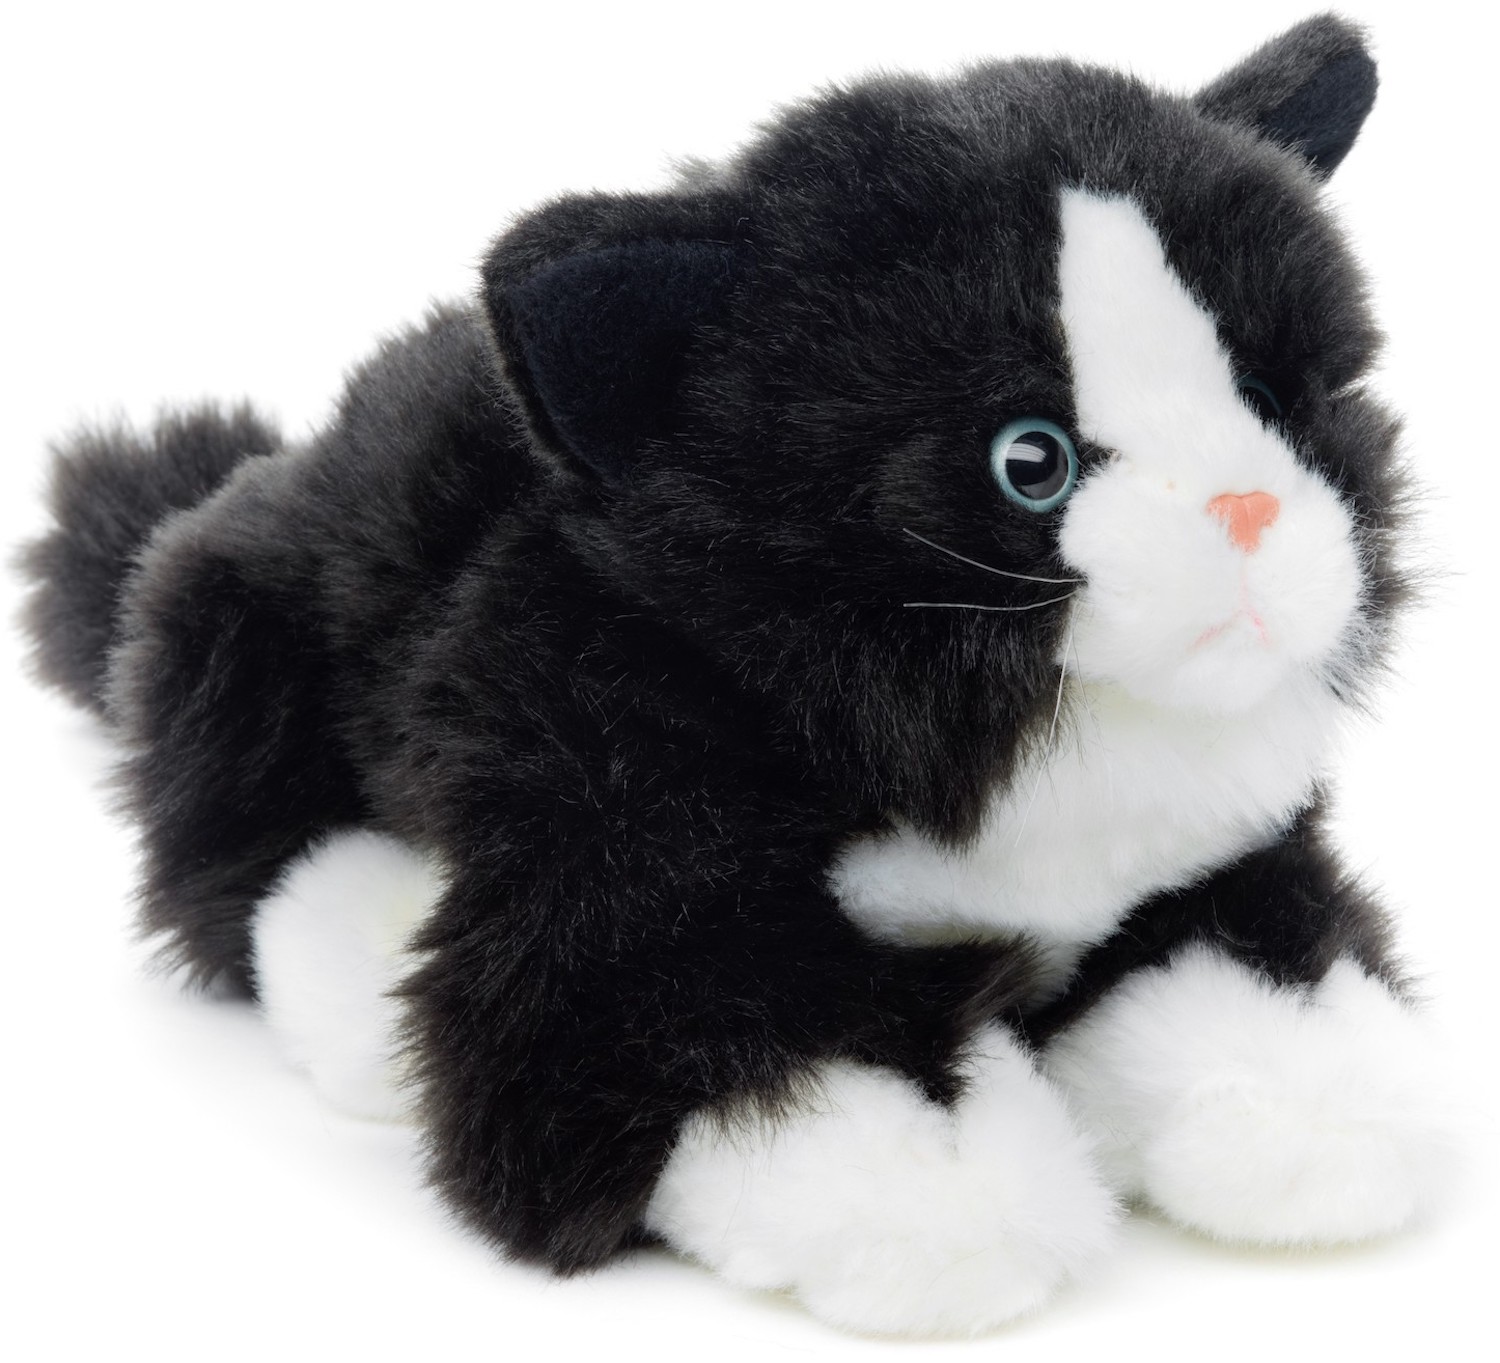 Cat black and white 20cm (length)